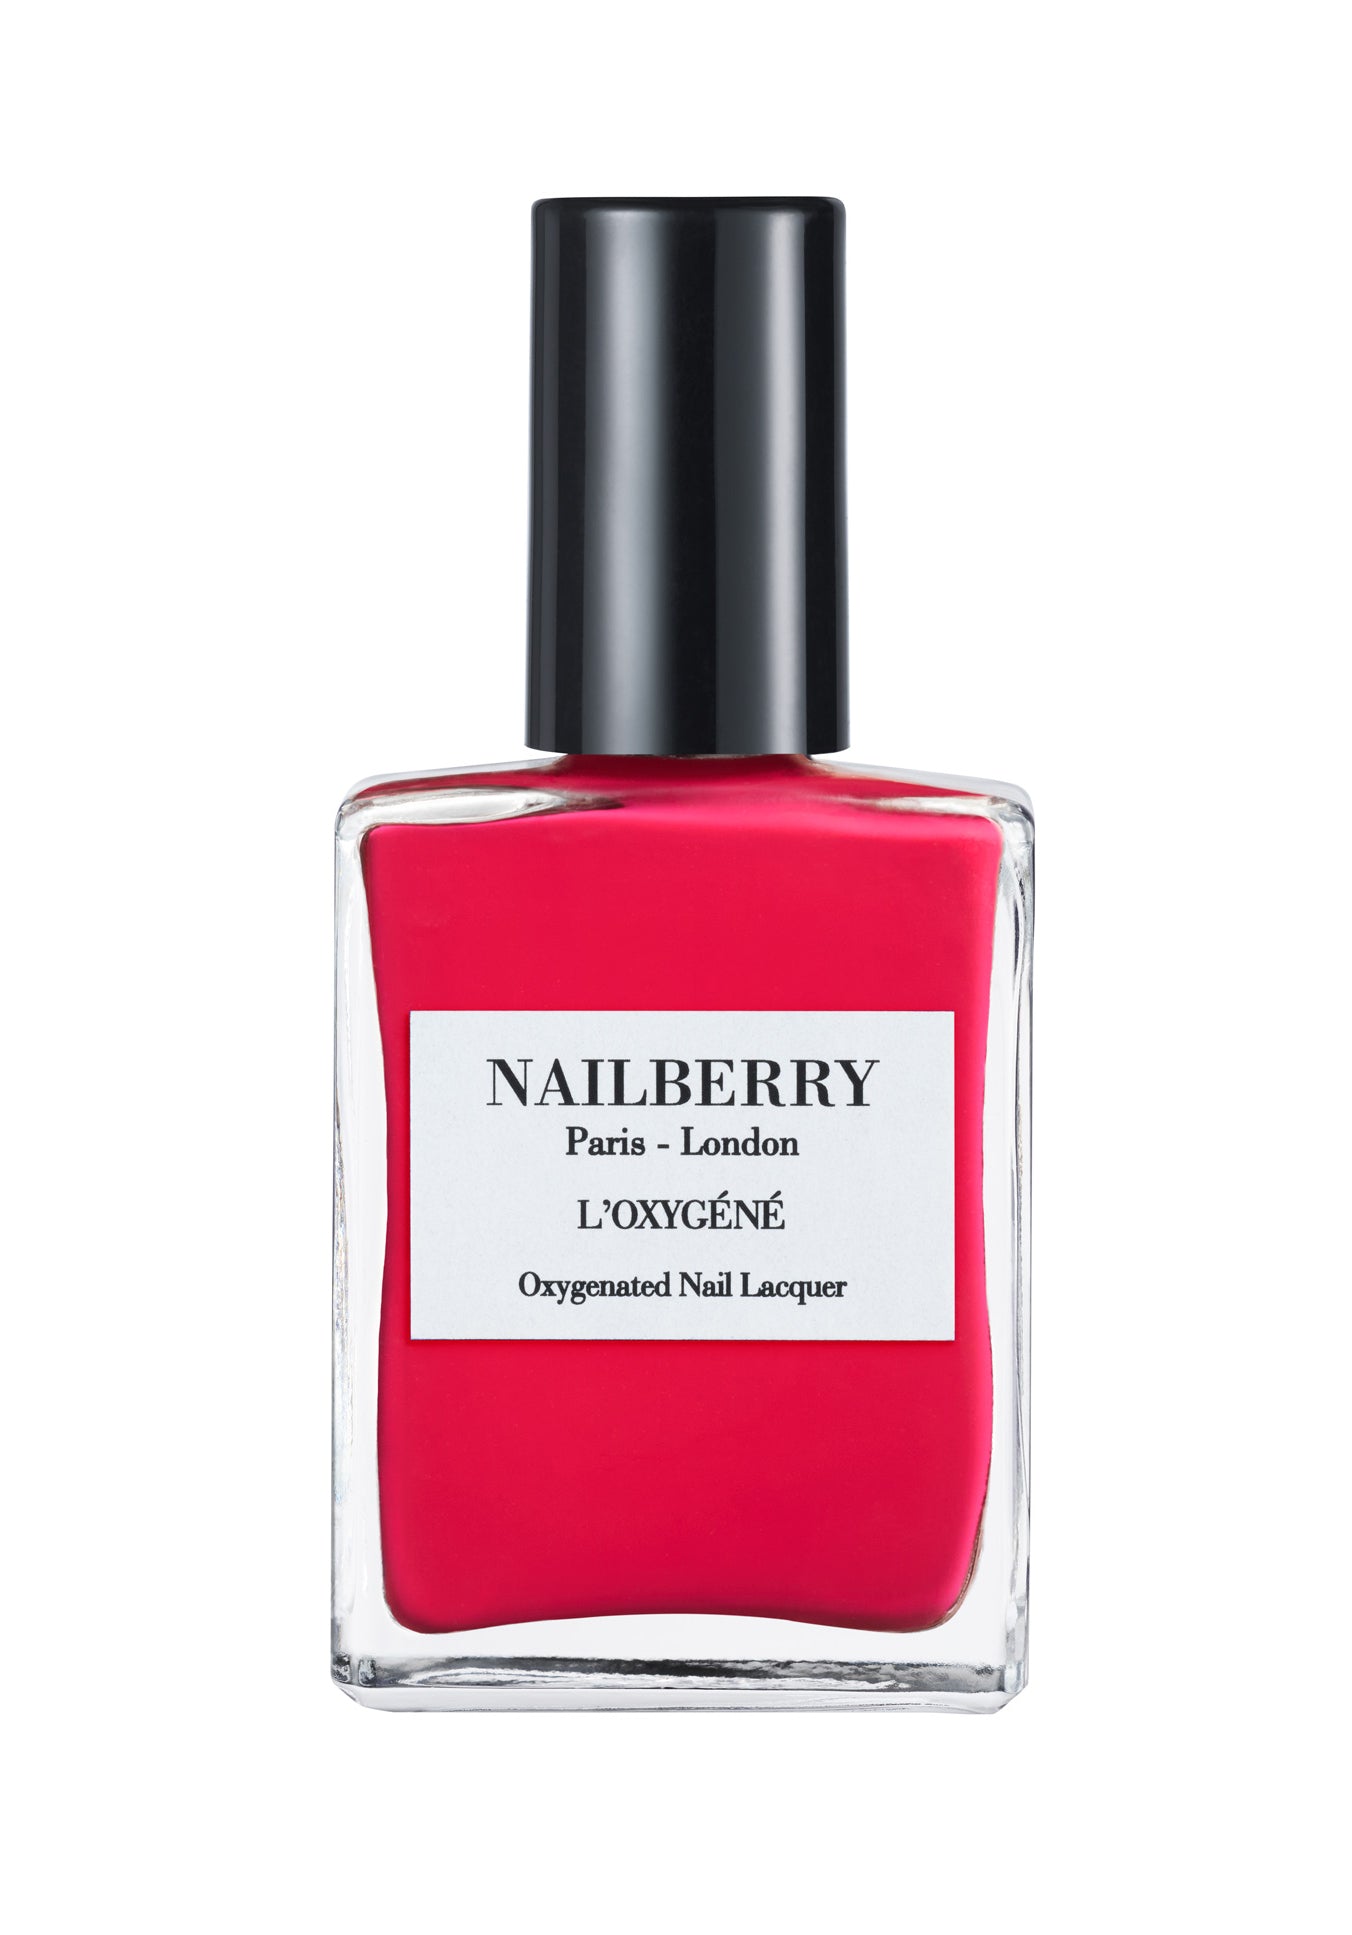 Nailberry neglelak Strawberry